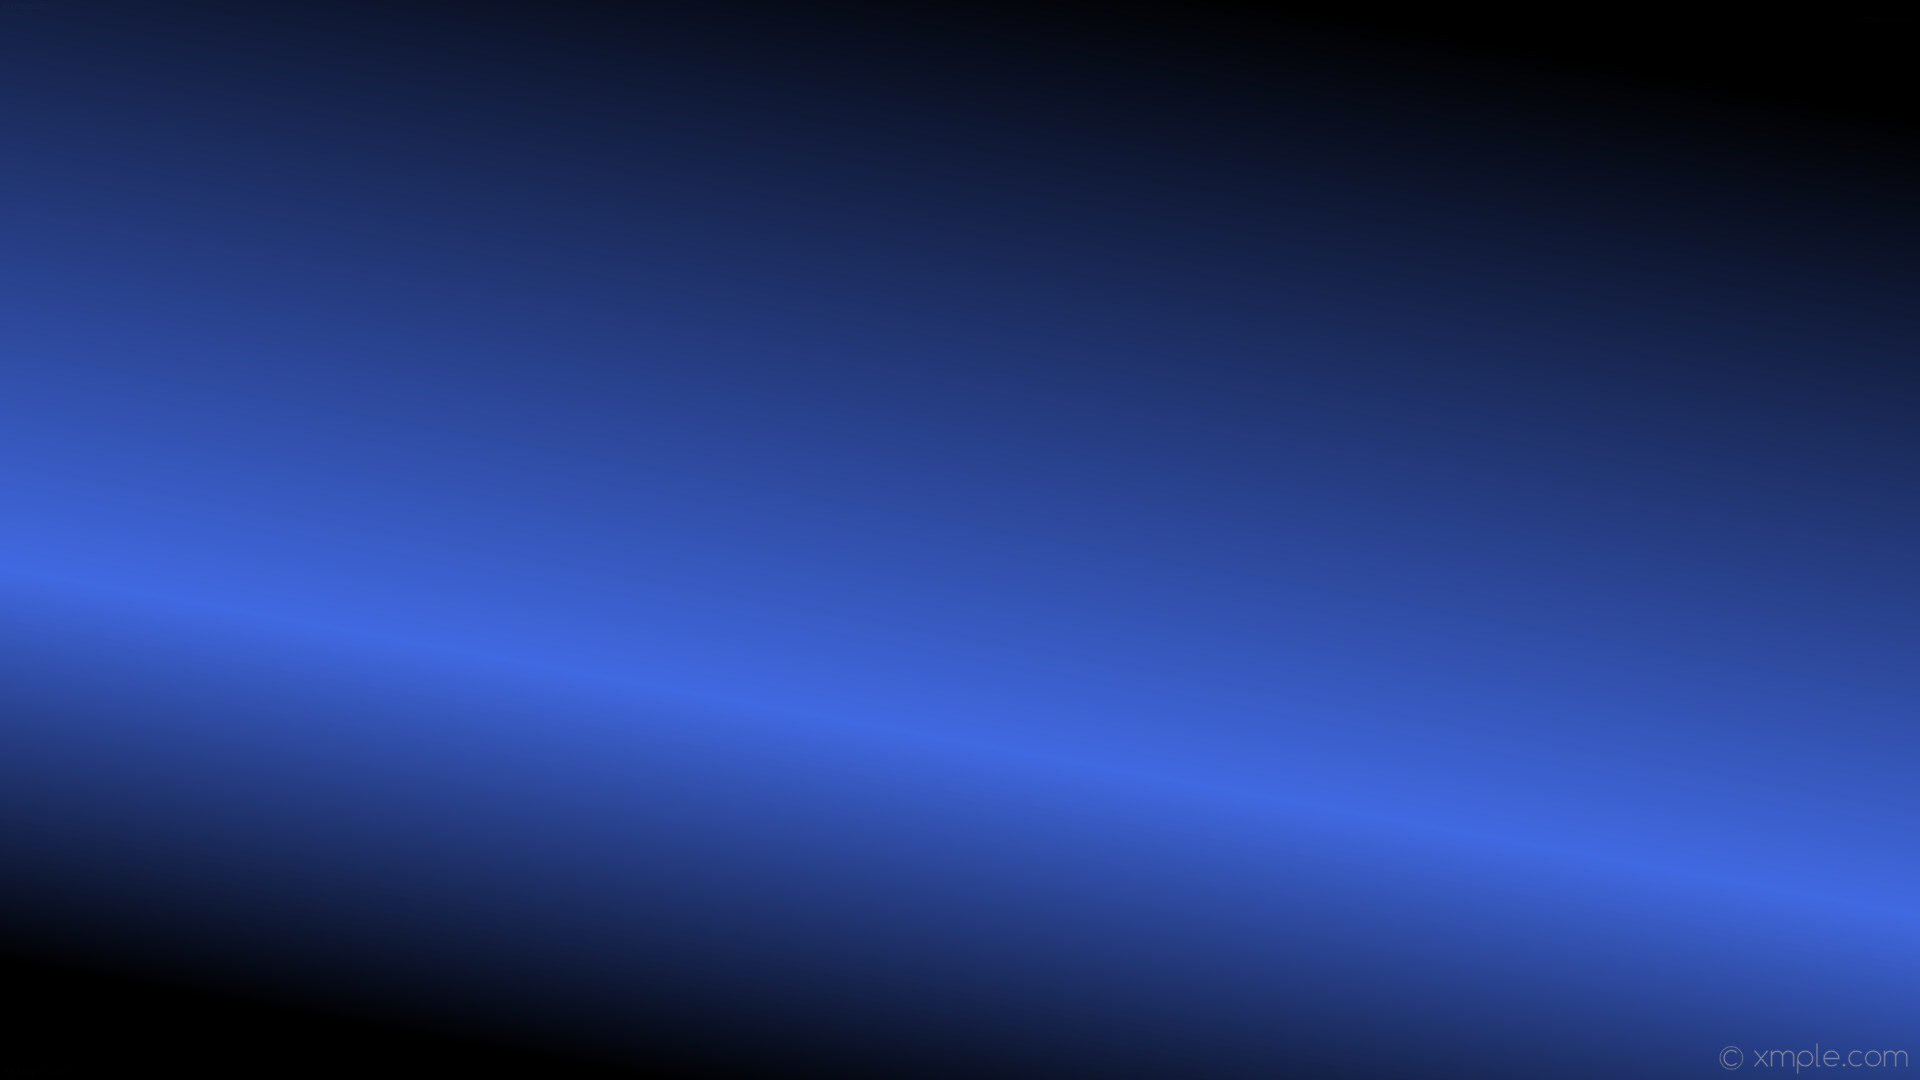 1920x1080 wallpaper linear black highlight blue gradient royal blue #000000 #4169e1  240Â° 33%